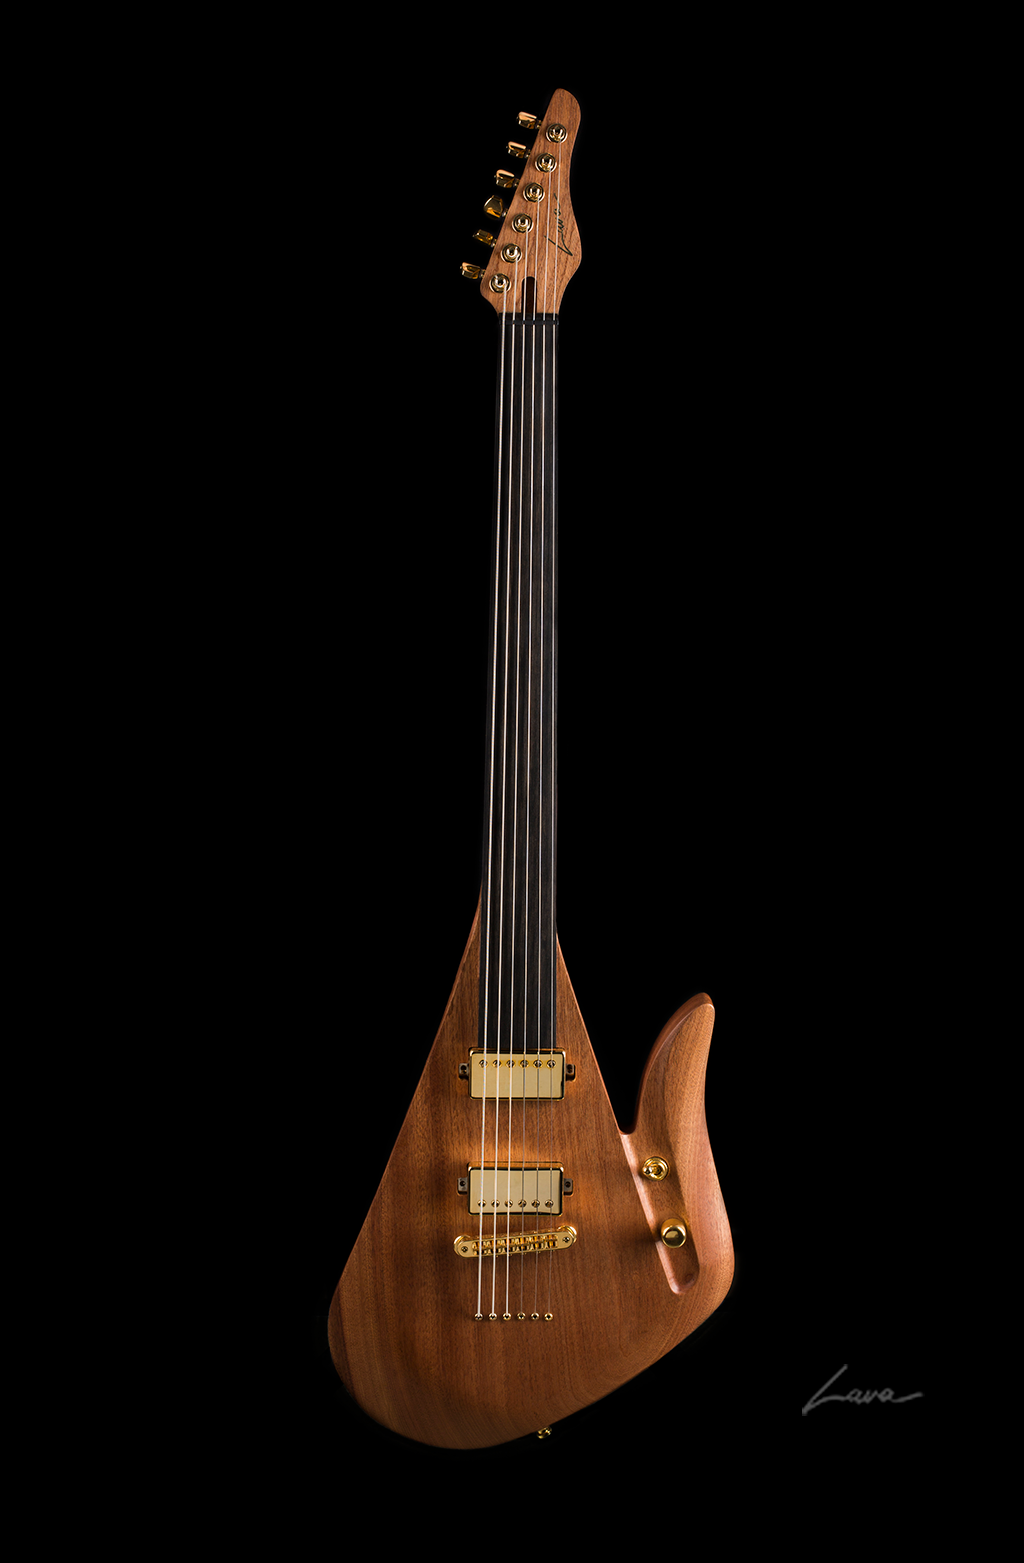 fretless guitar fretless guitar strings lava gold dark black instrument Viola contrabass Musical Instrument design wood neck